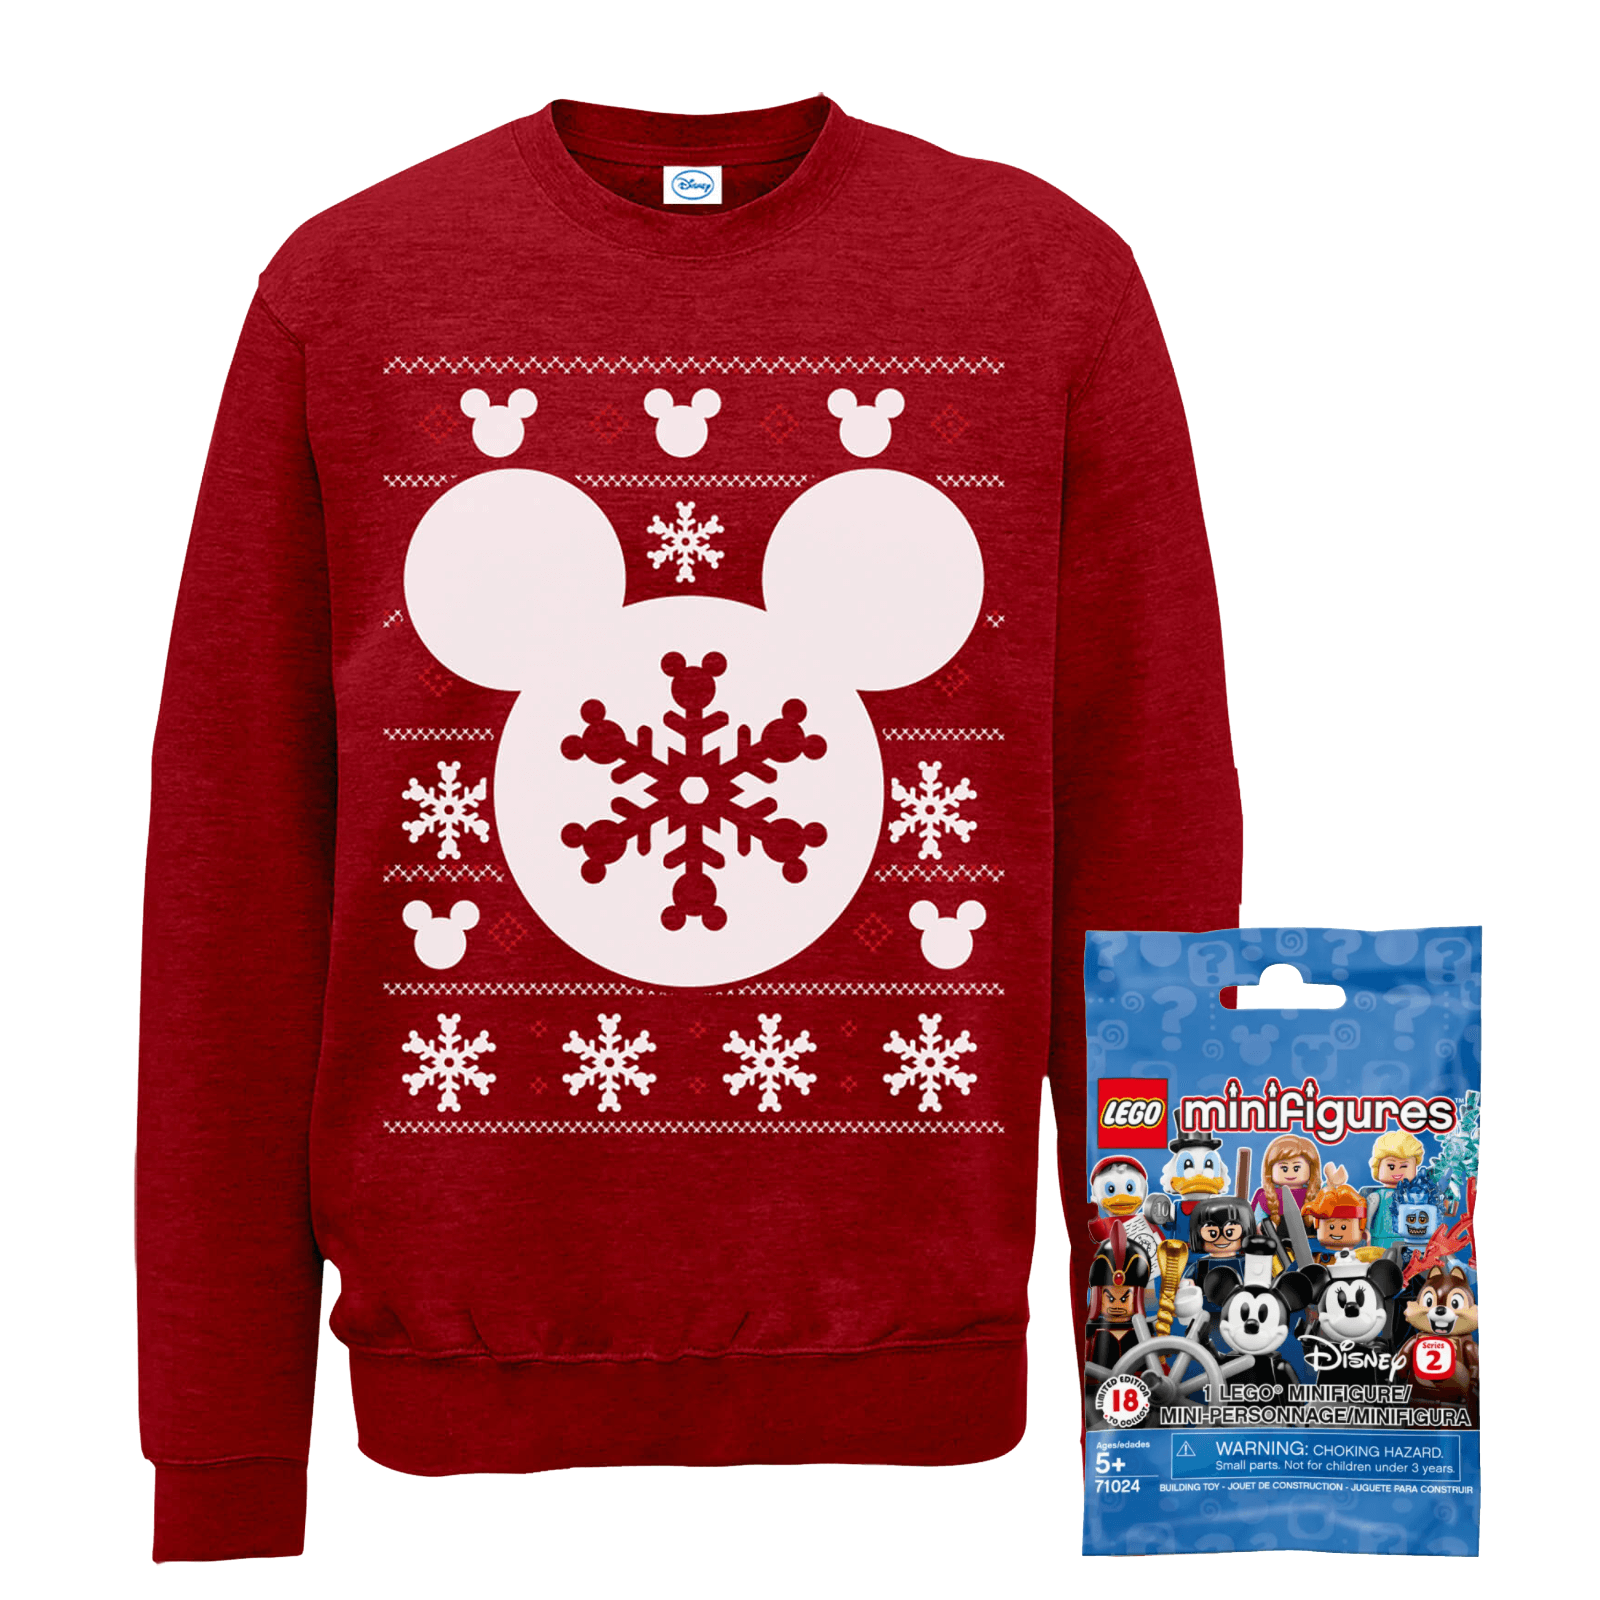 Disney Christmas Sweatshirt & Lego Minifigure Bundle - Kids' - 7-8 Years von Disney